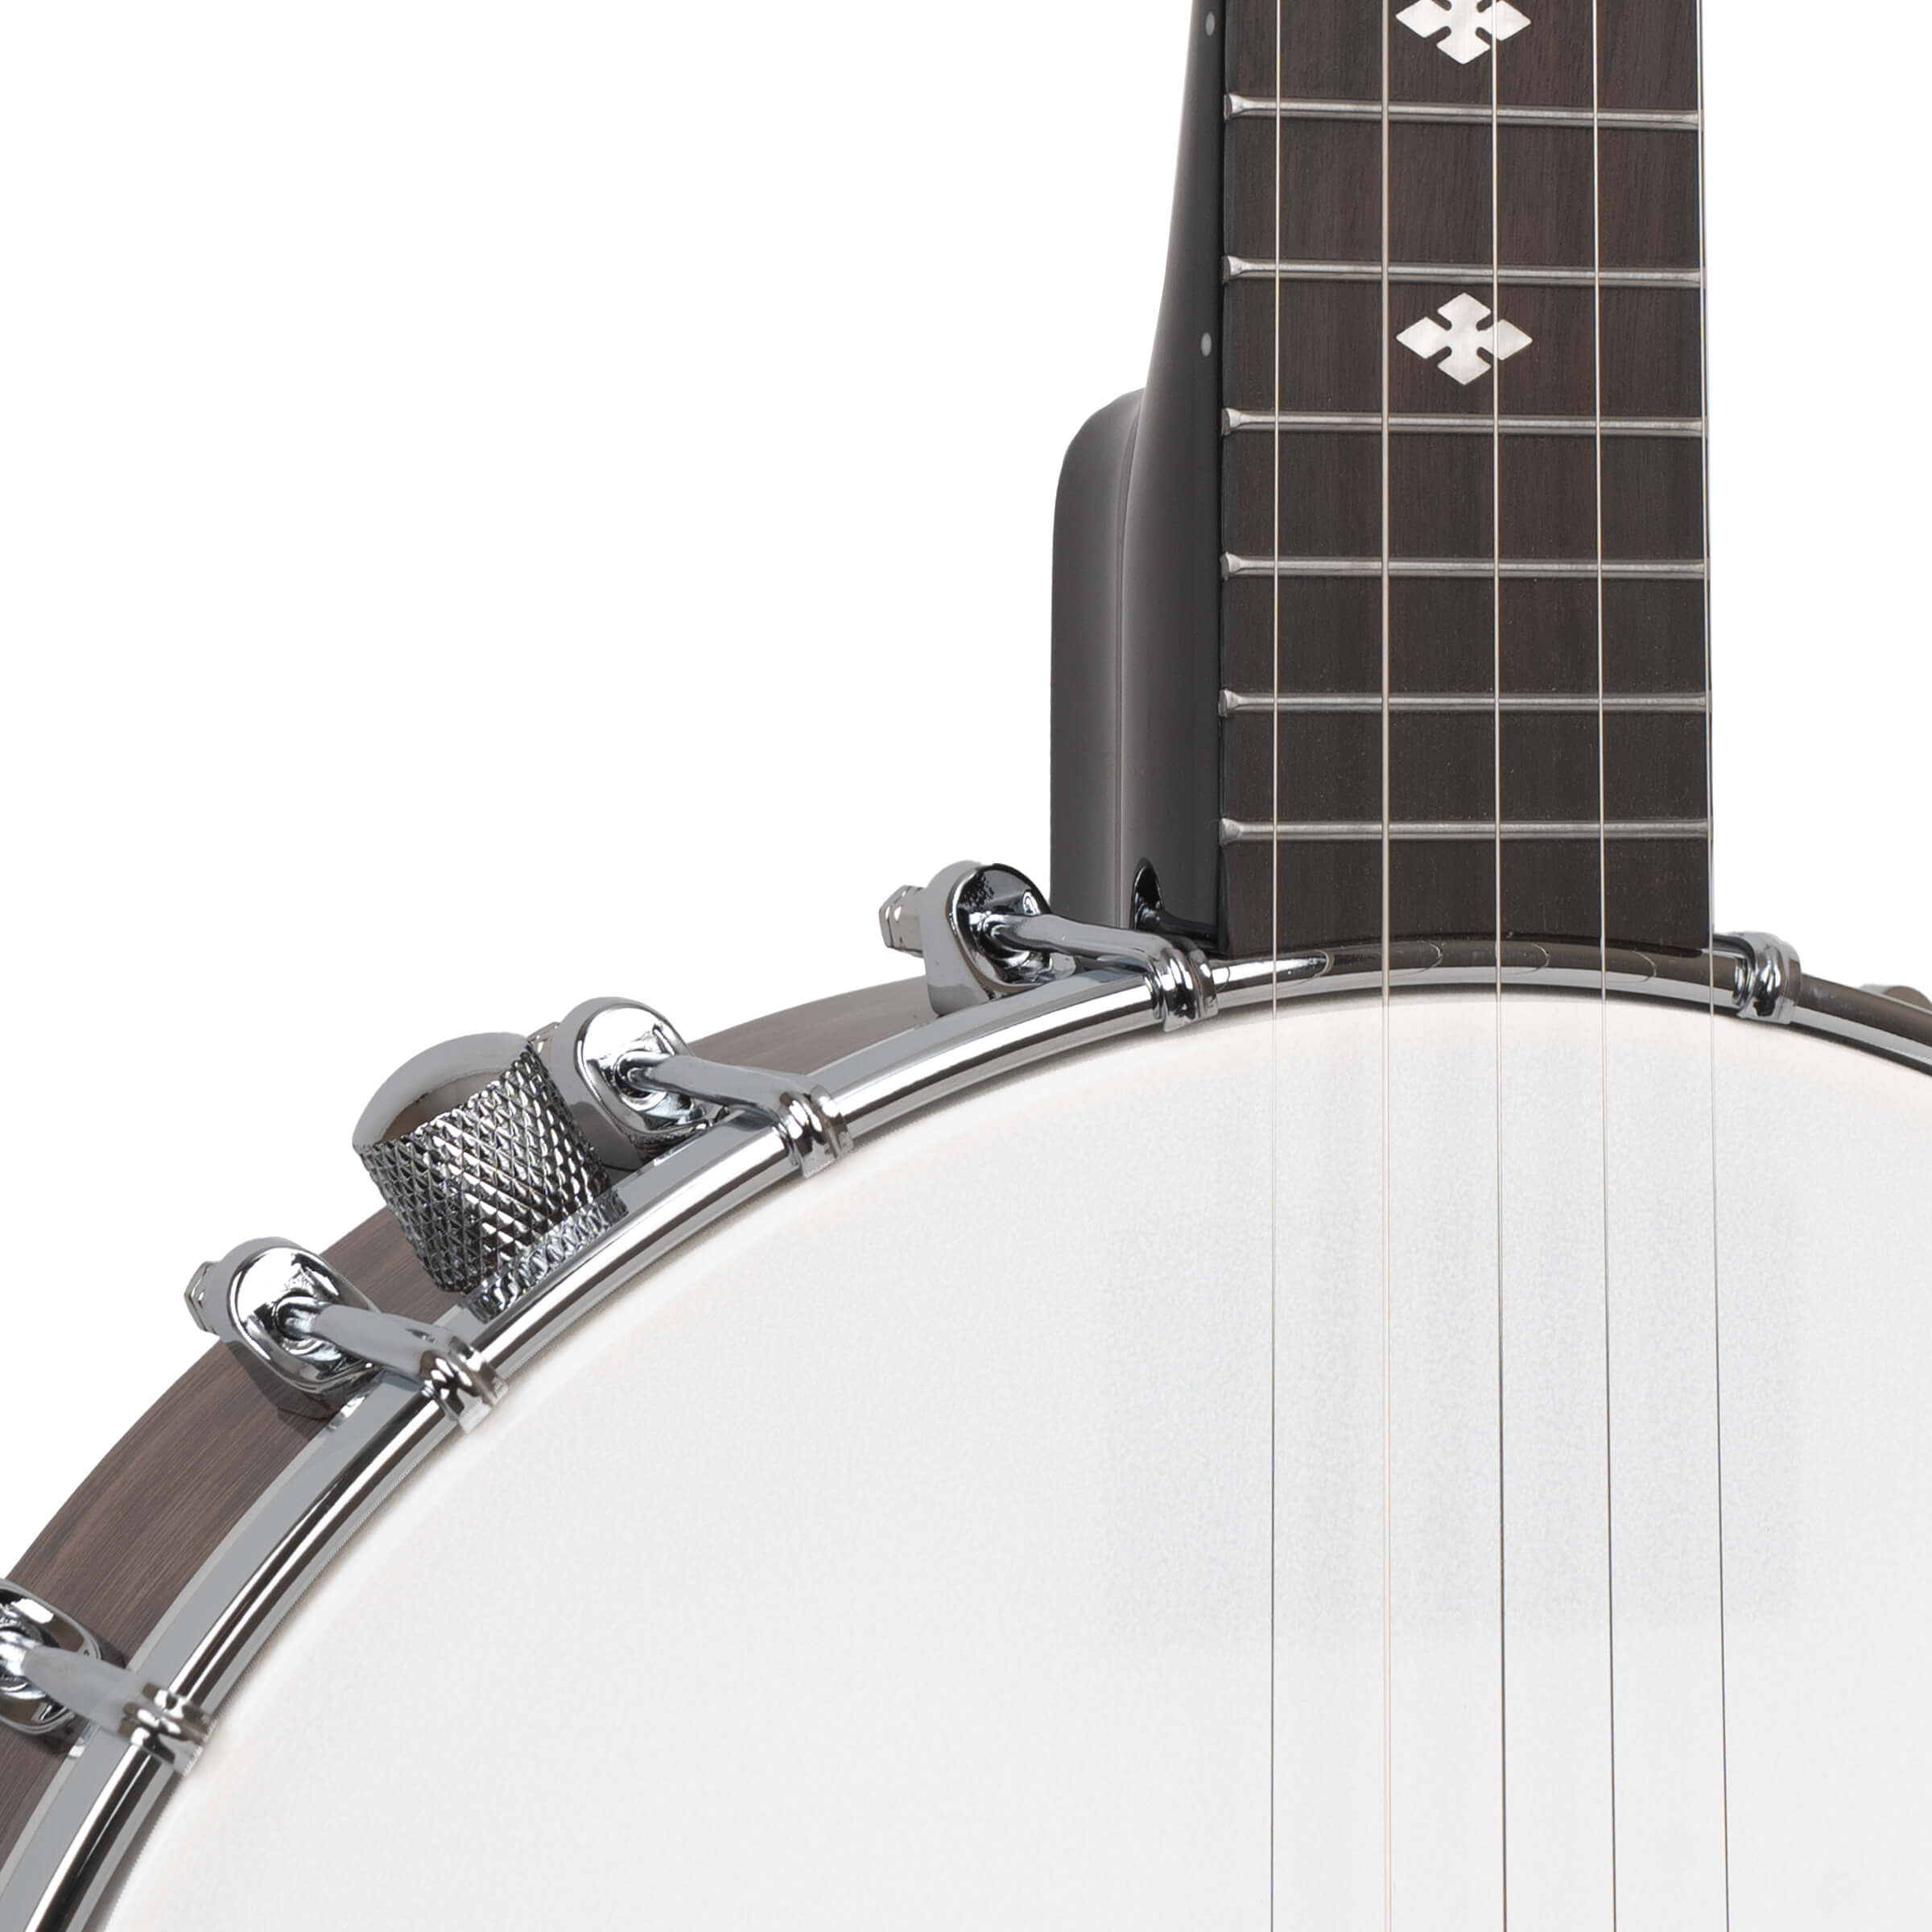 New Crescendo Music Folk & Native Bryden 5 String Banjo Pack - at